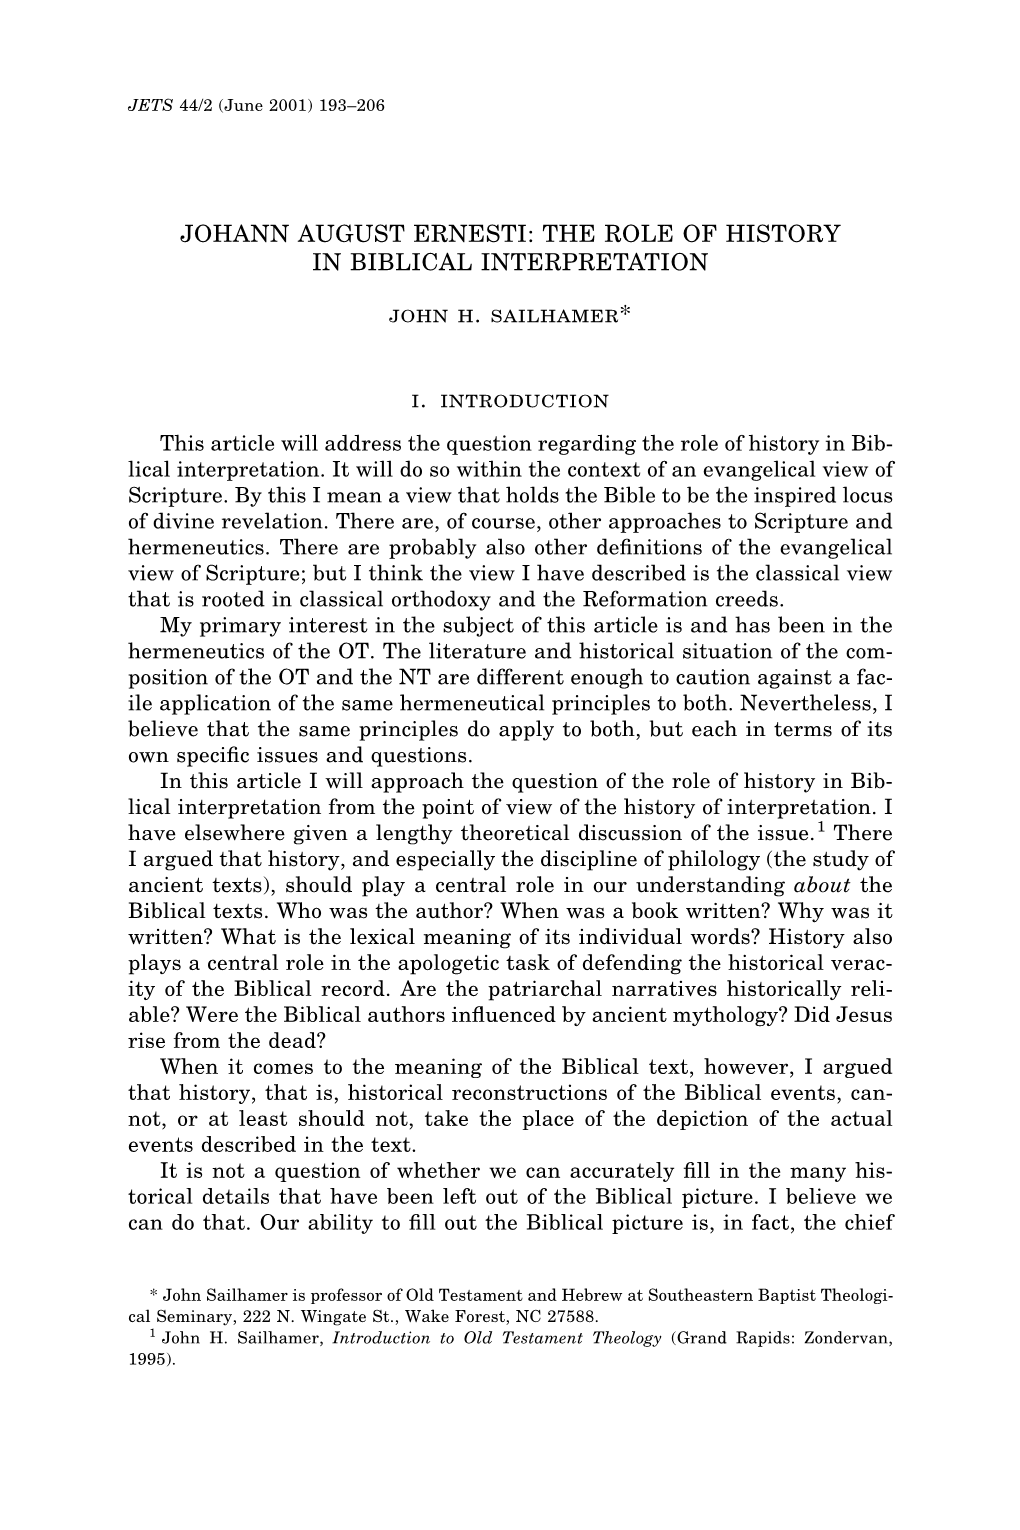 JOHANN AUGUST ERNESTI: the ROLE of HISTORY in BIBLICAL INTERPRETATION John H. Sailhamer* I. Introduction